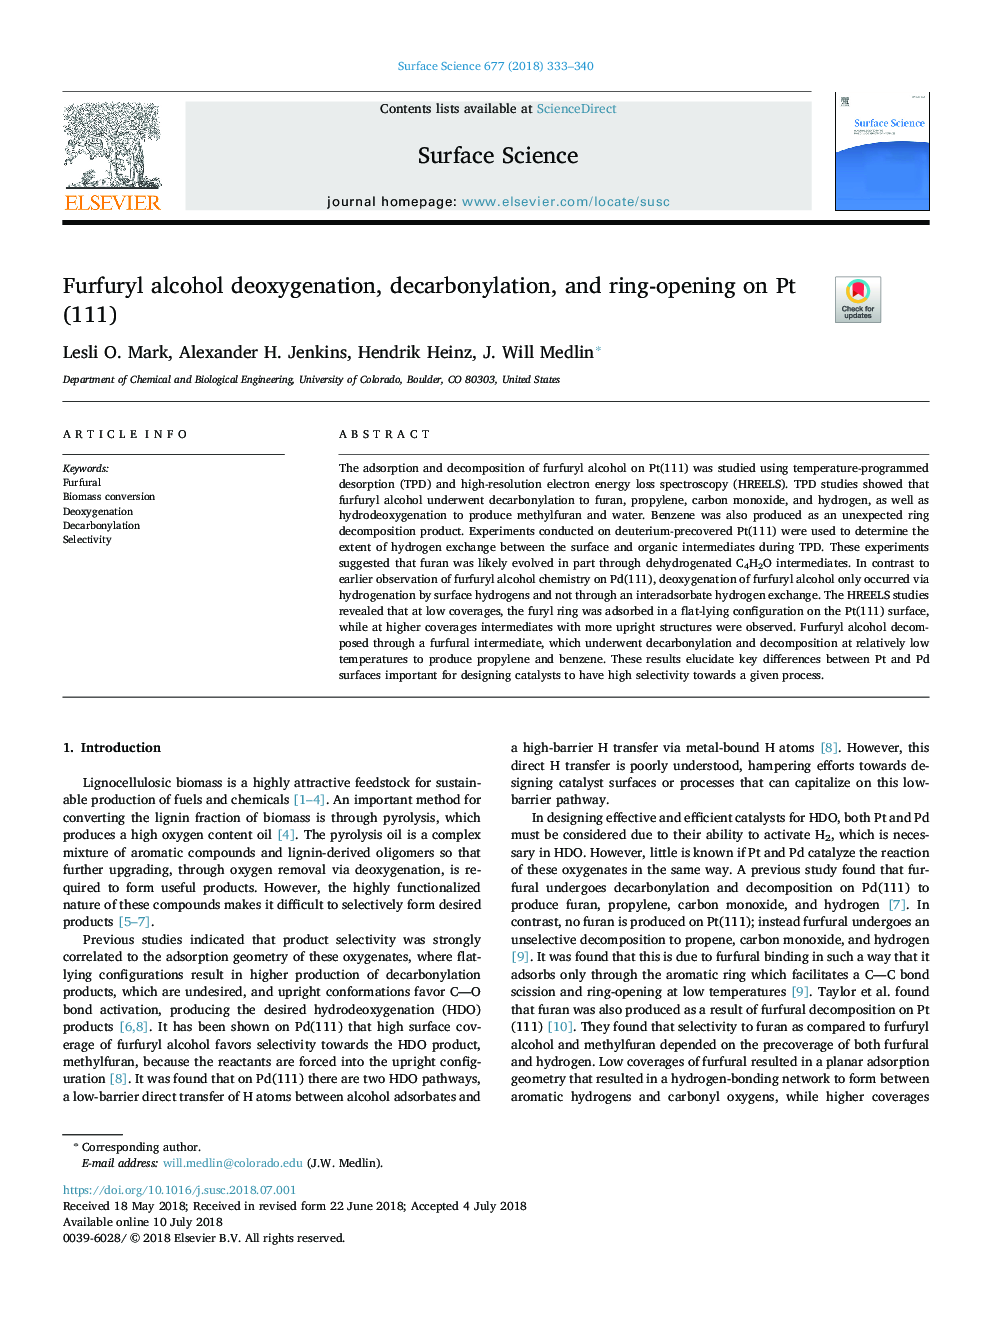 Furfuryl alcohol deoxygenation, decarbonylation, and ring-opening on Pt(111)